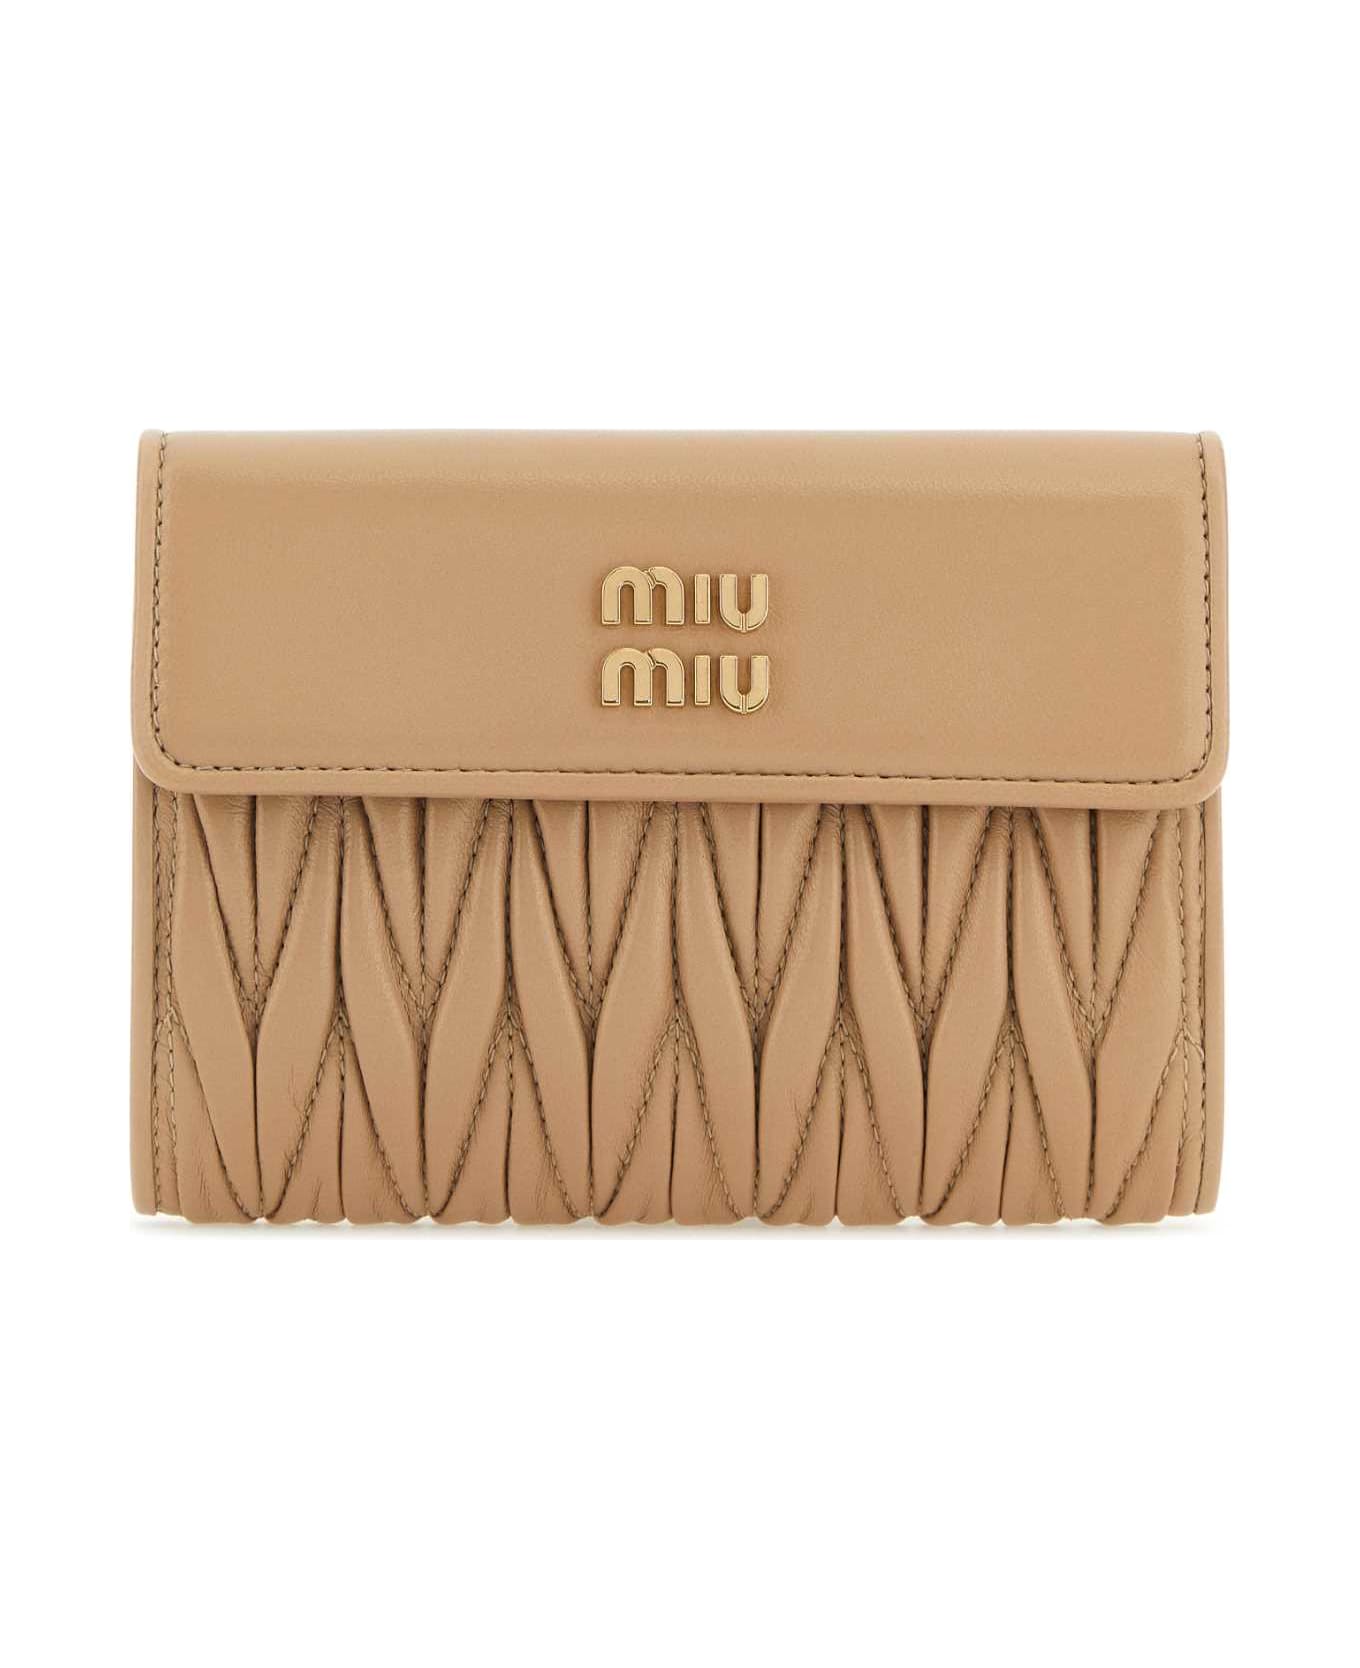 Miu Miu Sand Nappa Leather Wallet - SABBIA